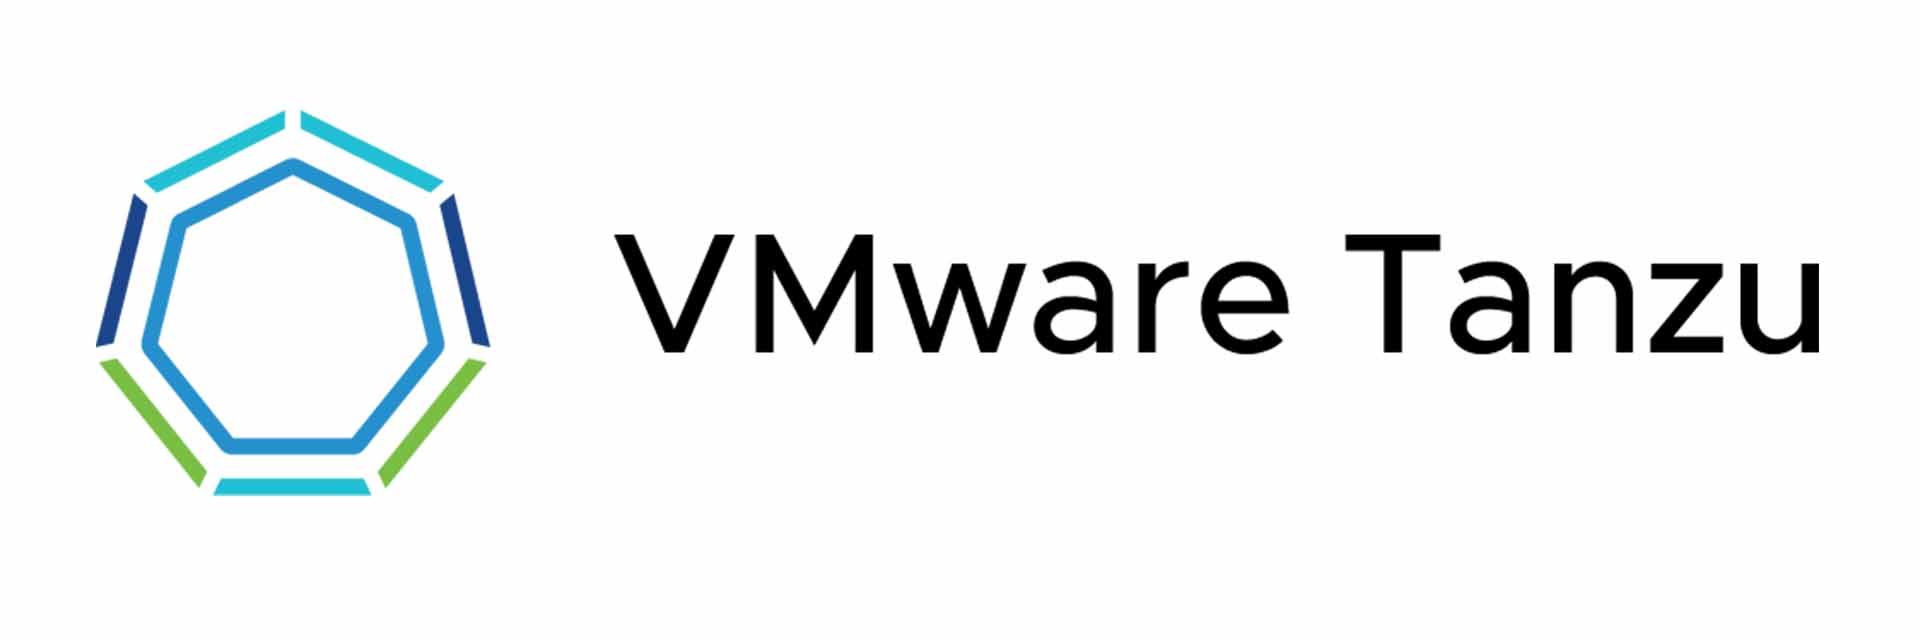 VMware Tanzu Logo